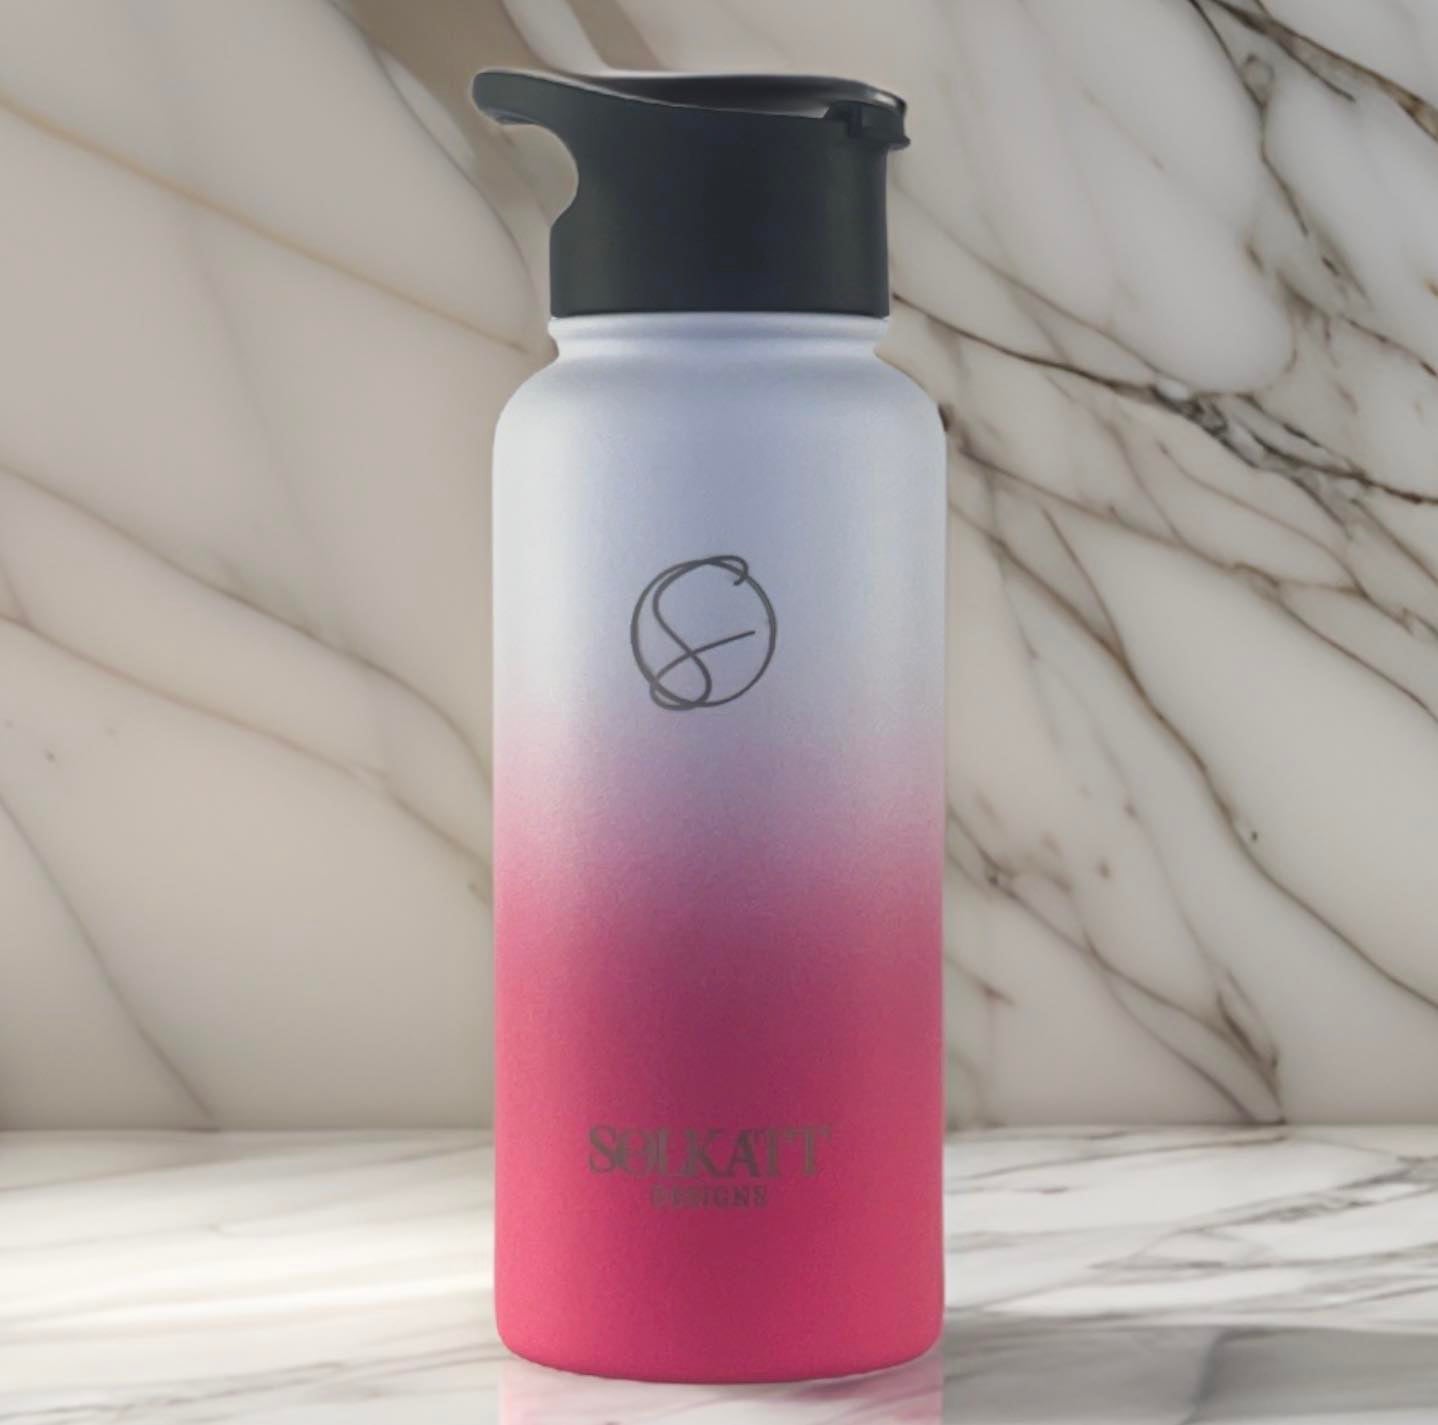 Hot Pink 950ml / 32oz Stainless Steel Insulated Drink Bottle - Solkatt Designs 